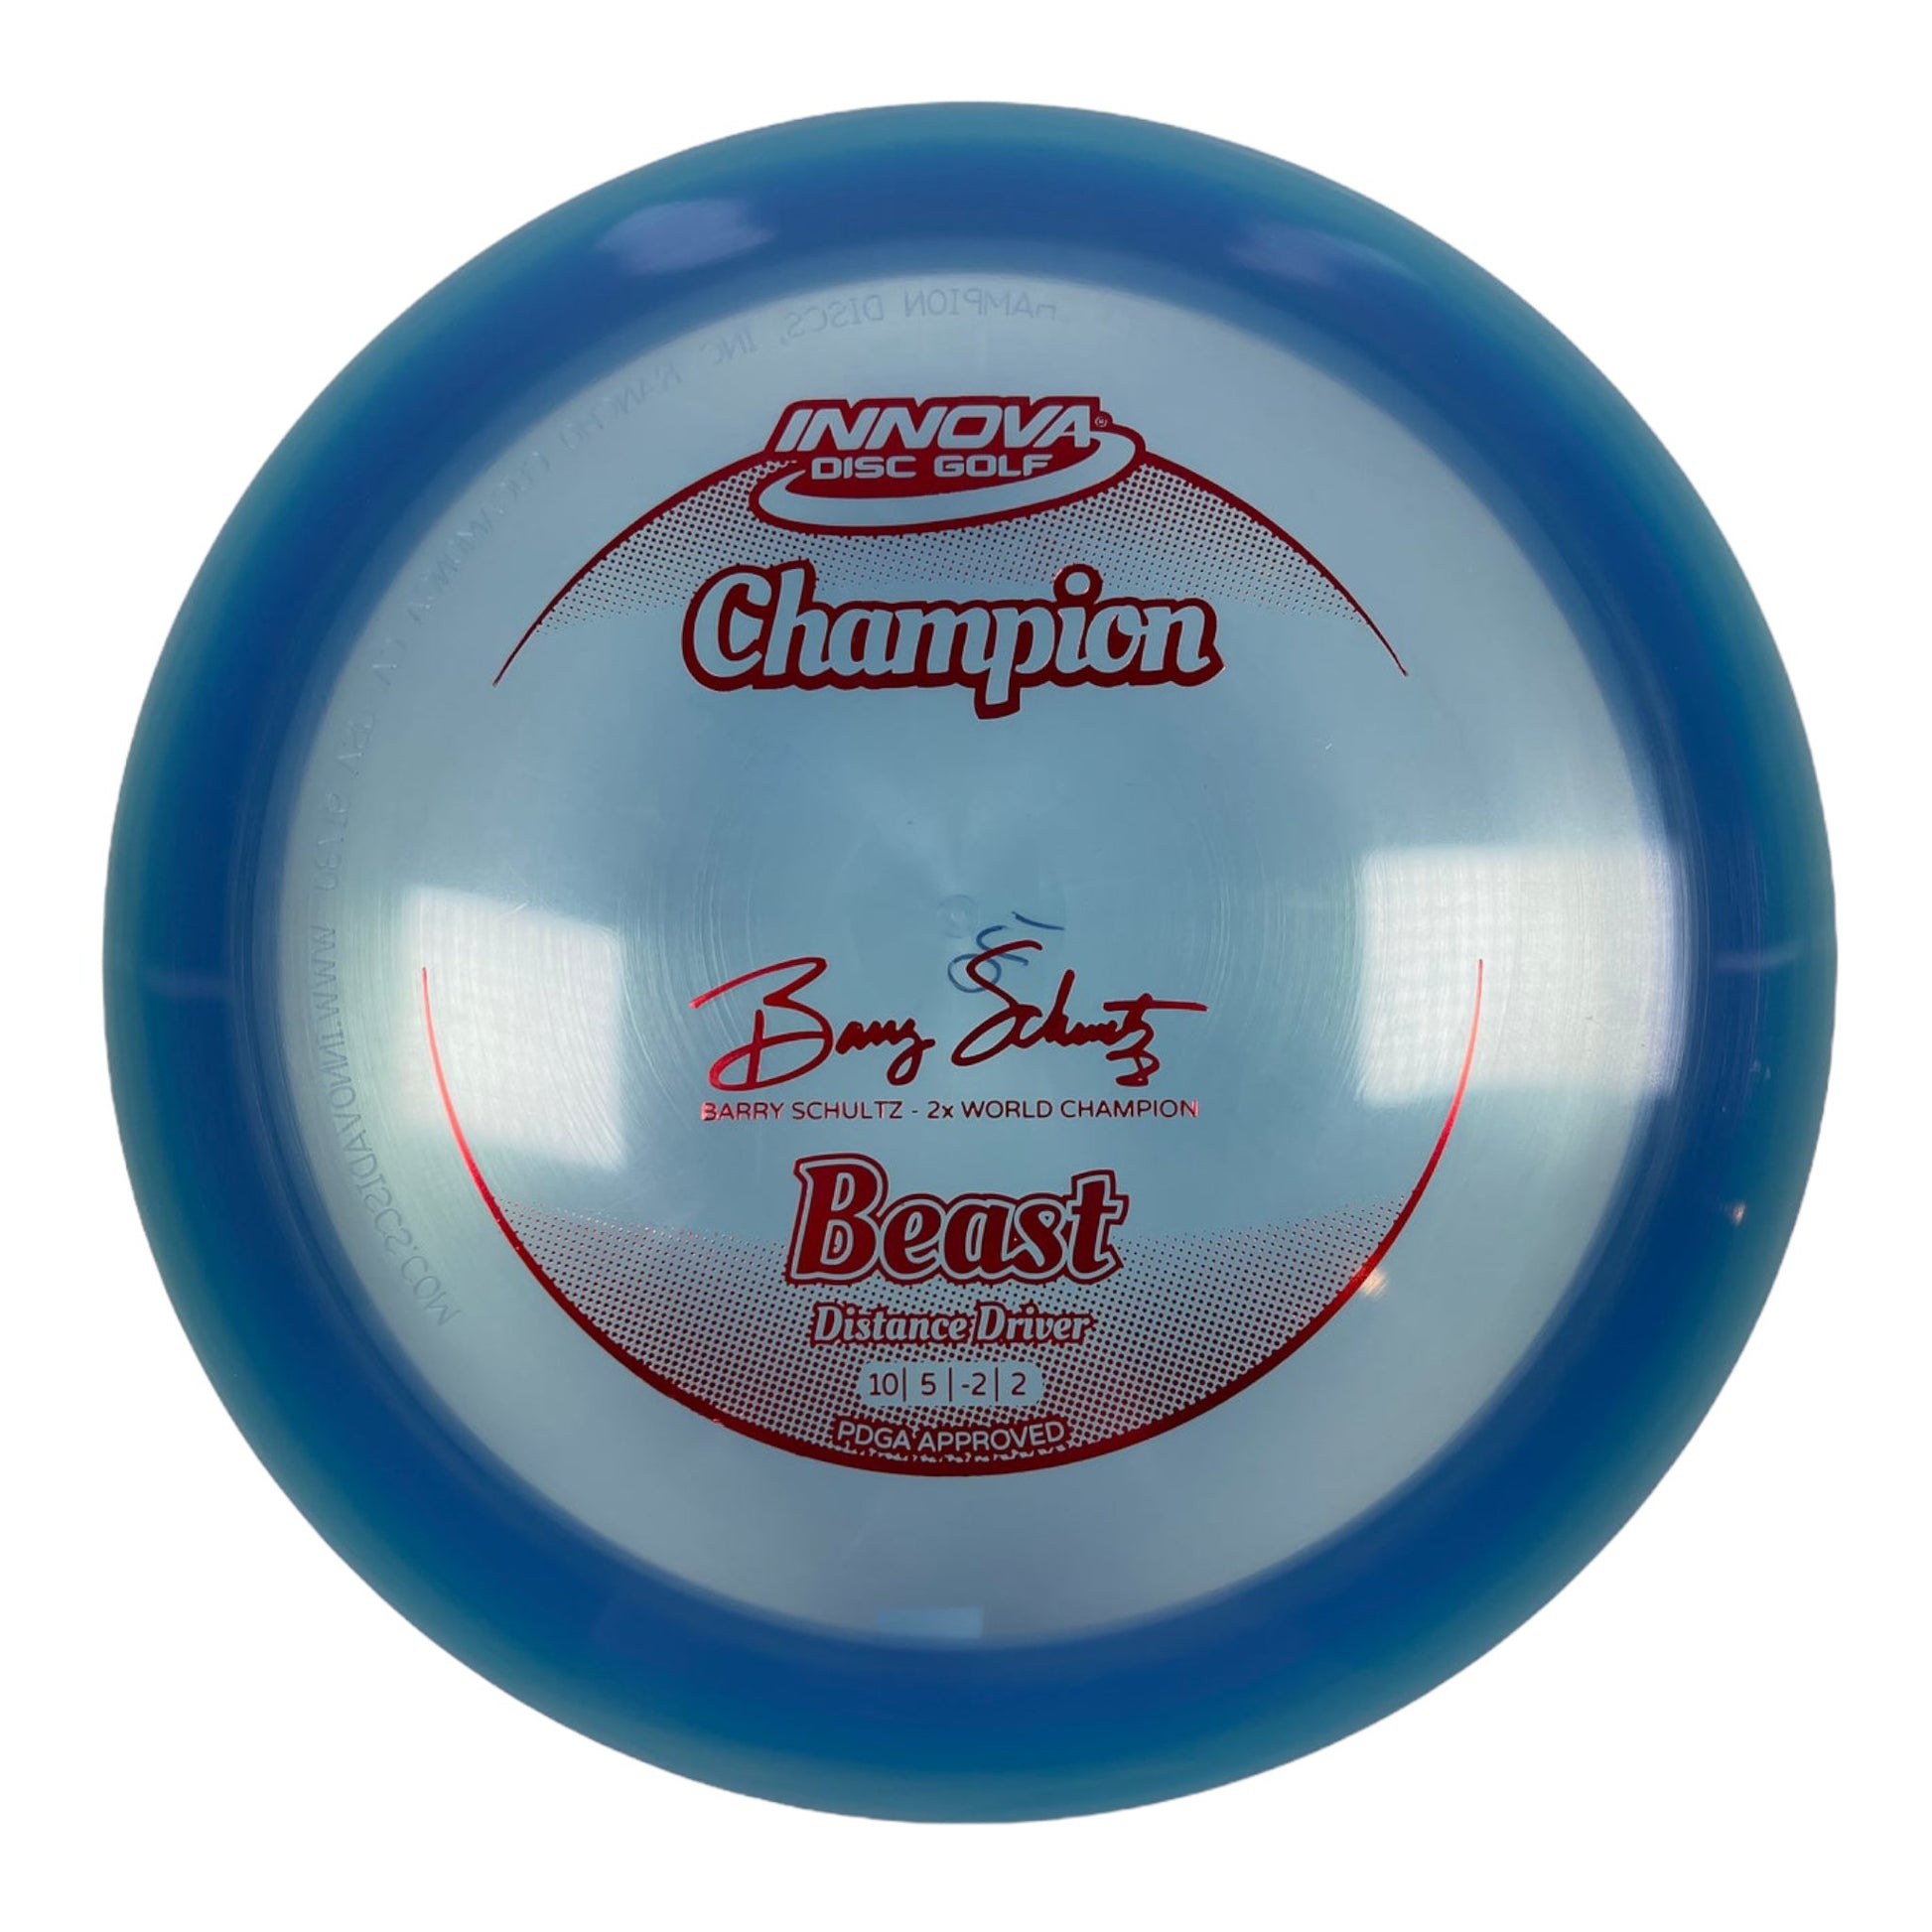 Innova Champion Discs Beast | Champion | Blue/Red 170g Disc Golf